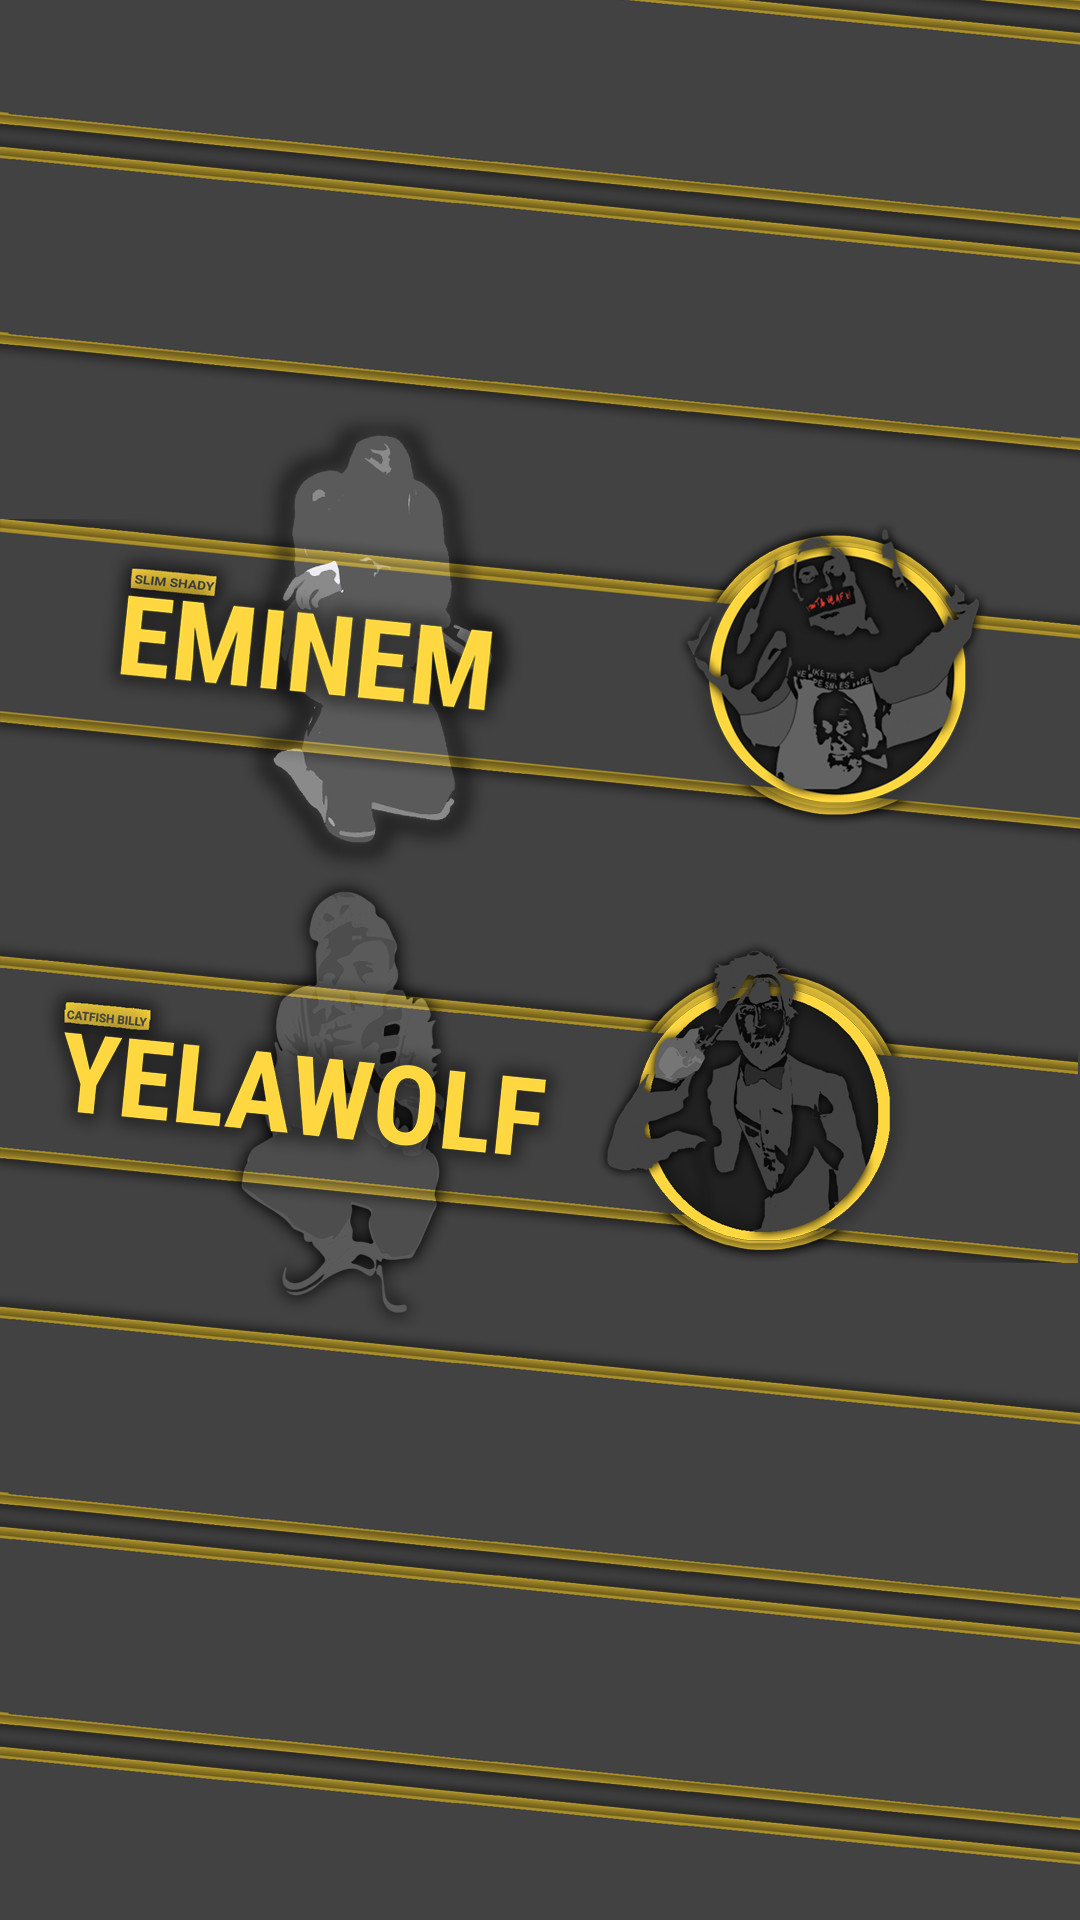 1080x1920 Yelawolf/Eminem Phone Wallpaper by ShadiestWolf Yelawolf/Eminem Phone  Wallpaper by ShadiestWolf